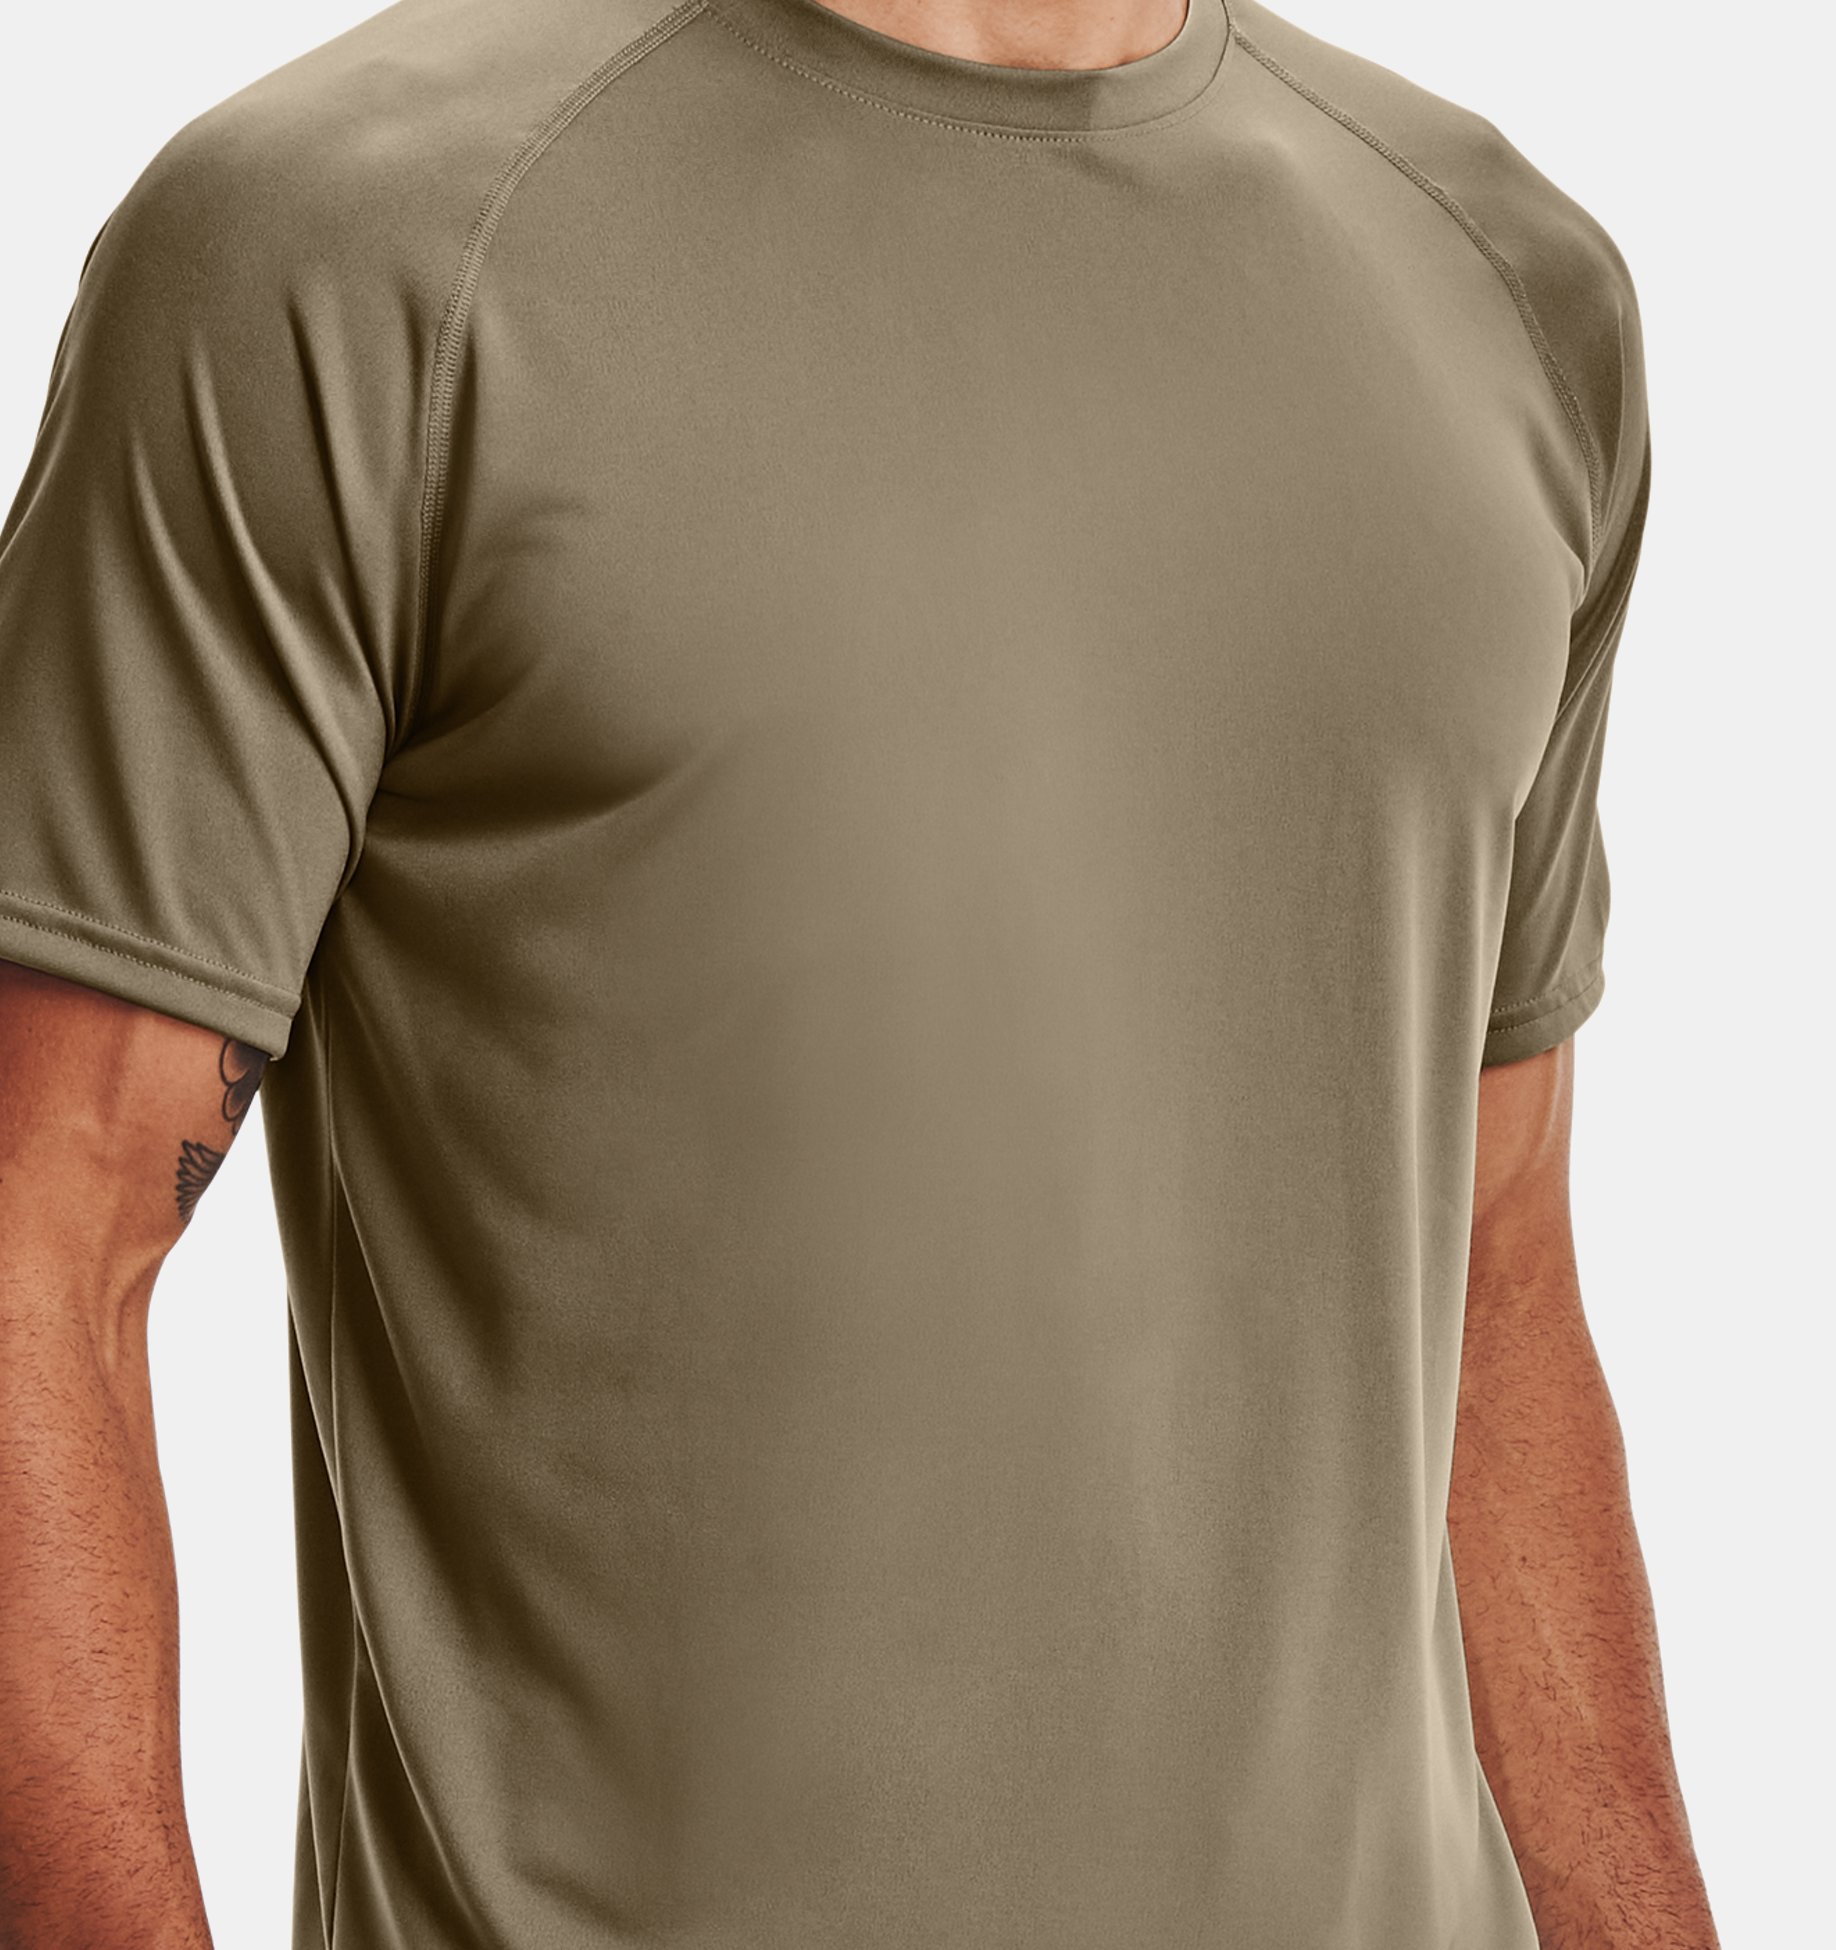 Under Armour Men's Tactical Tech T-Shirt : : Everything Else